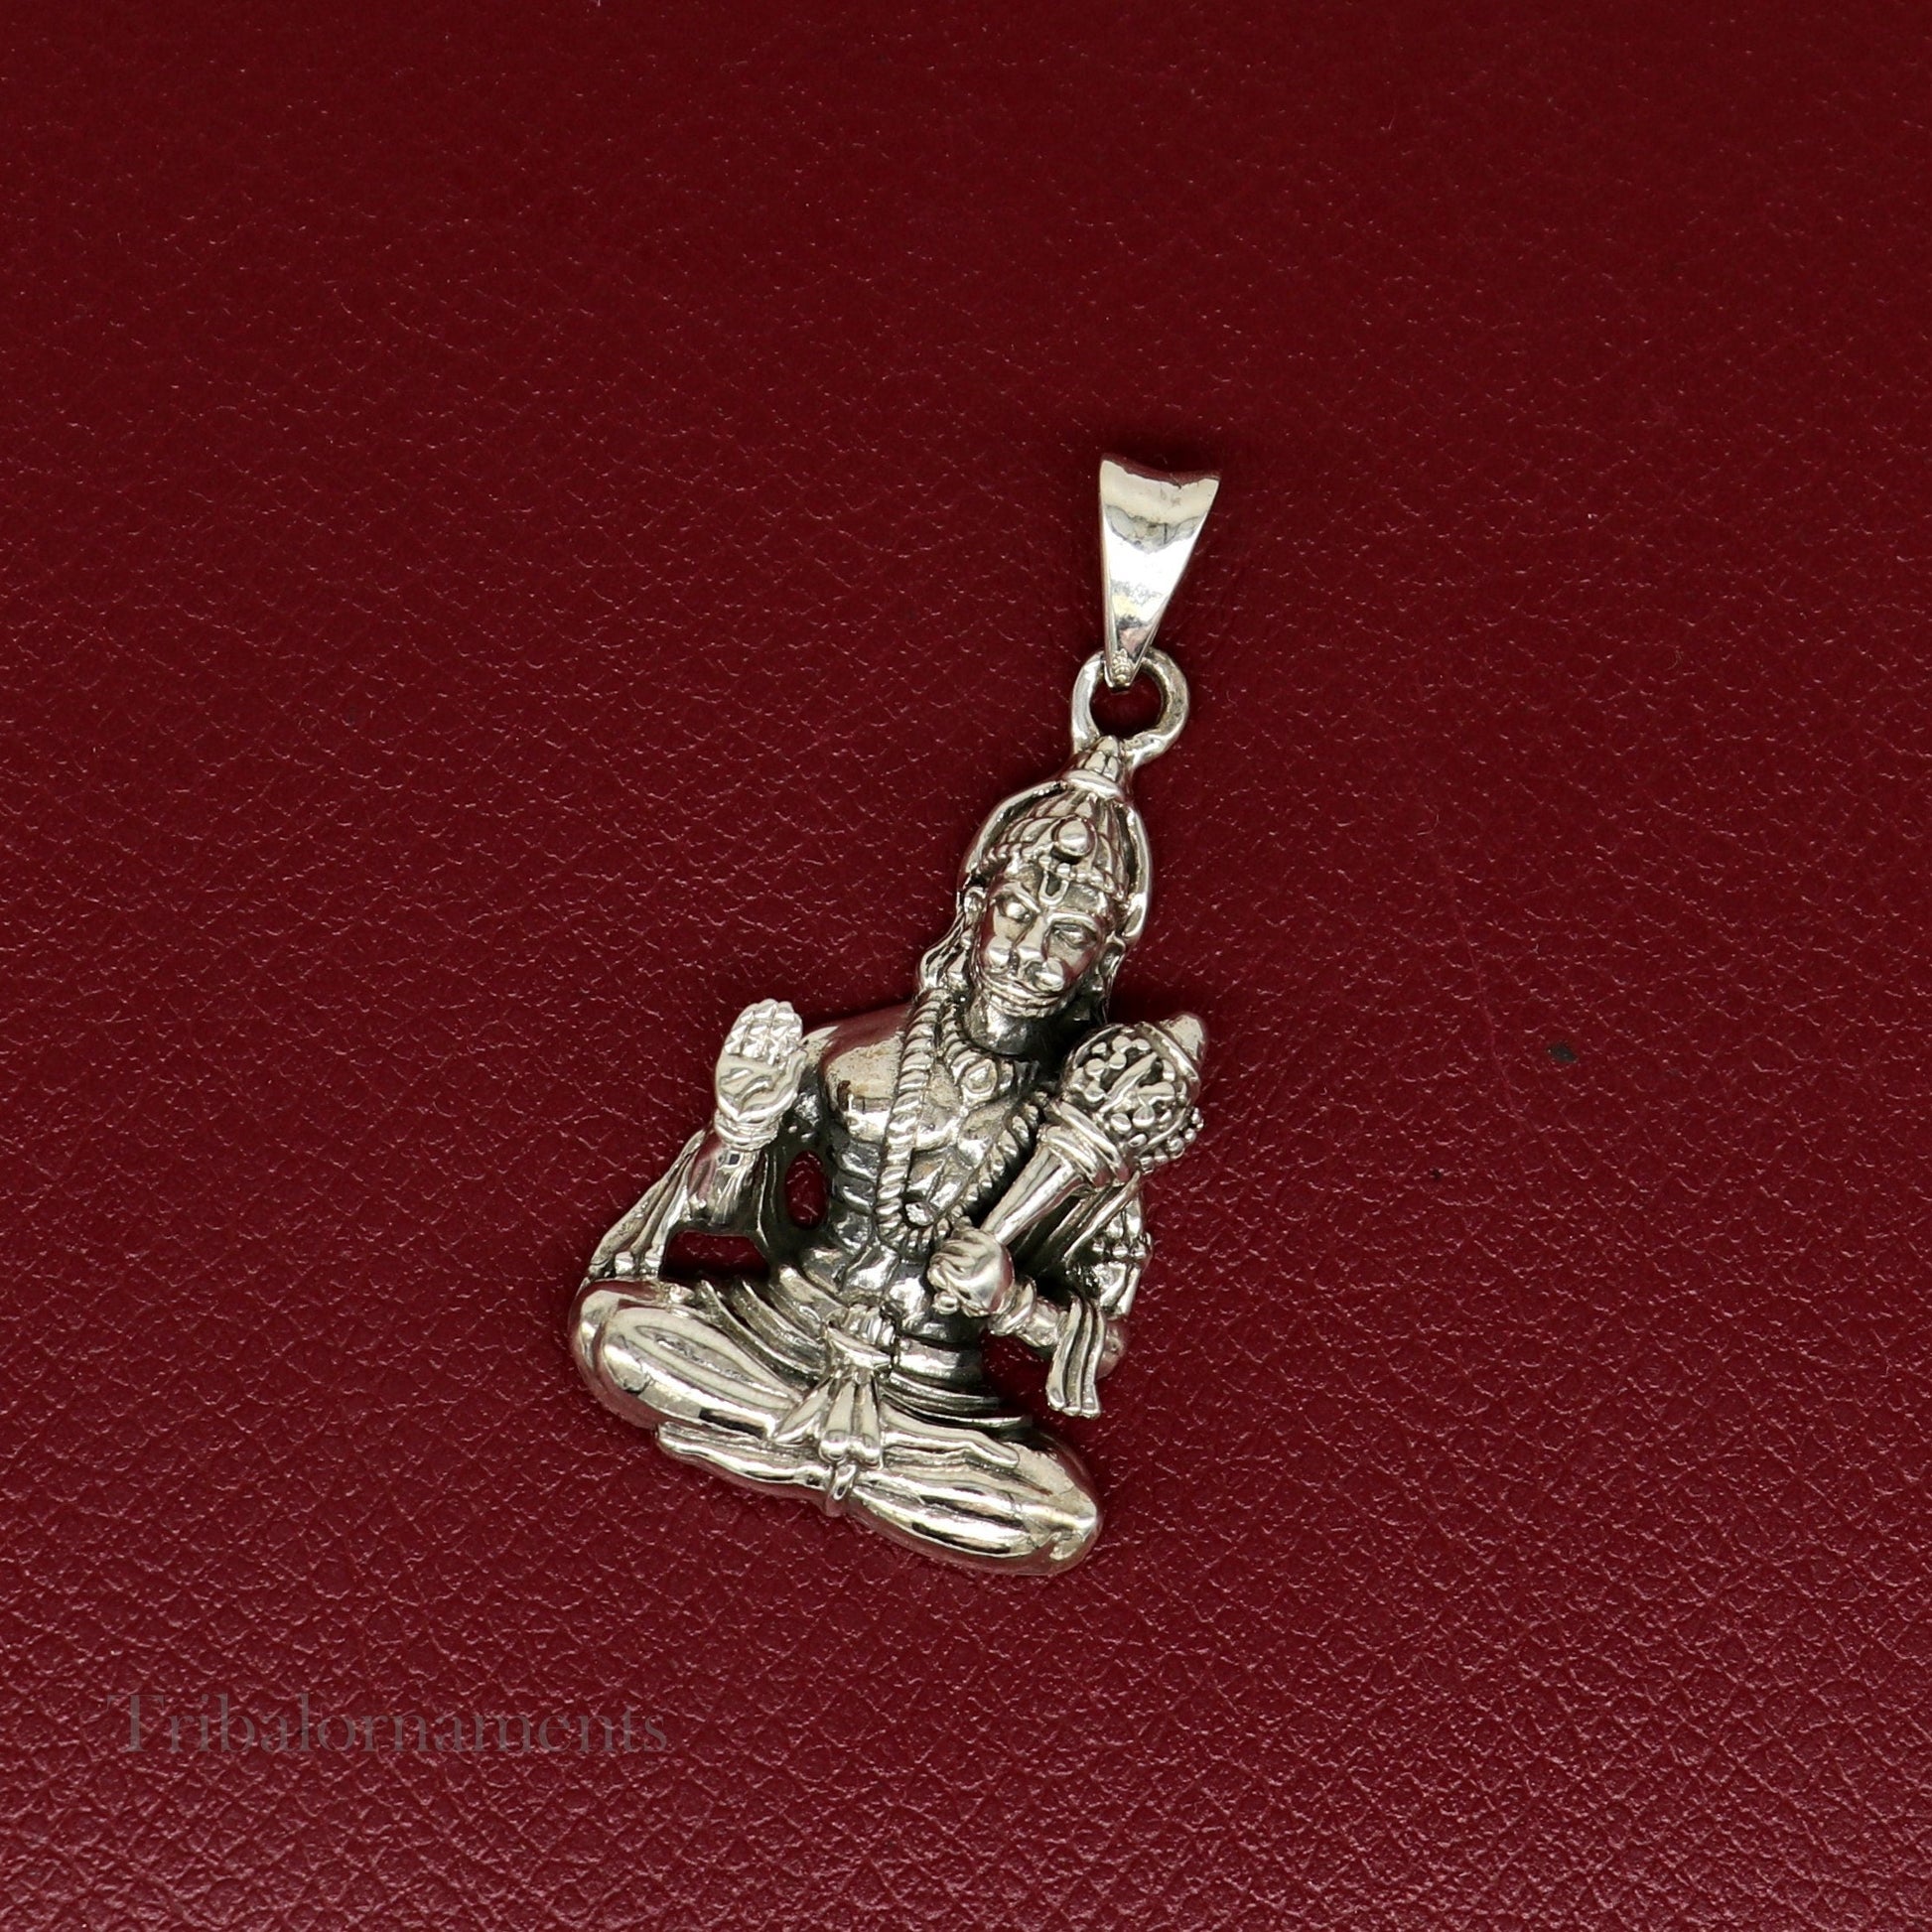 God hanuman pendant 92.5 sterling silver handmade god idol Bajaranbali pendant, amazing designer fabulous pendant gifting jewelry ssp967 - TRIBAL ORNAMENTS